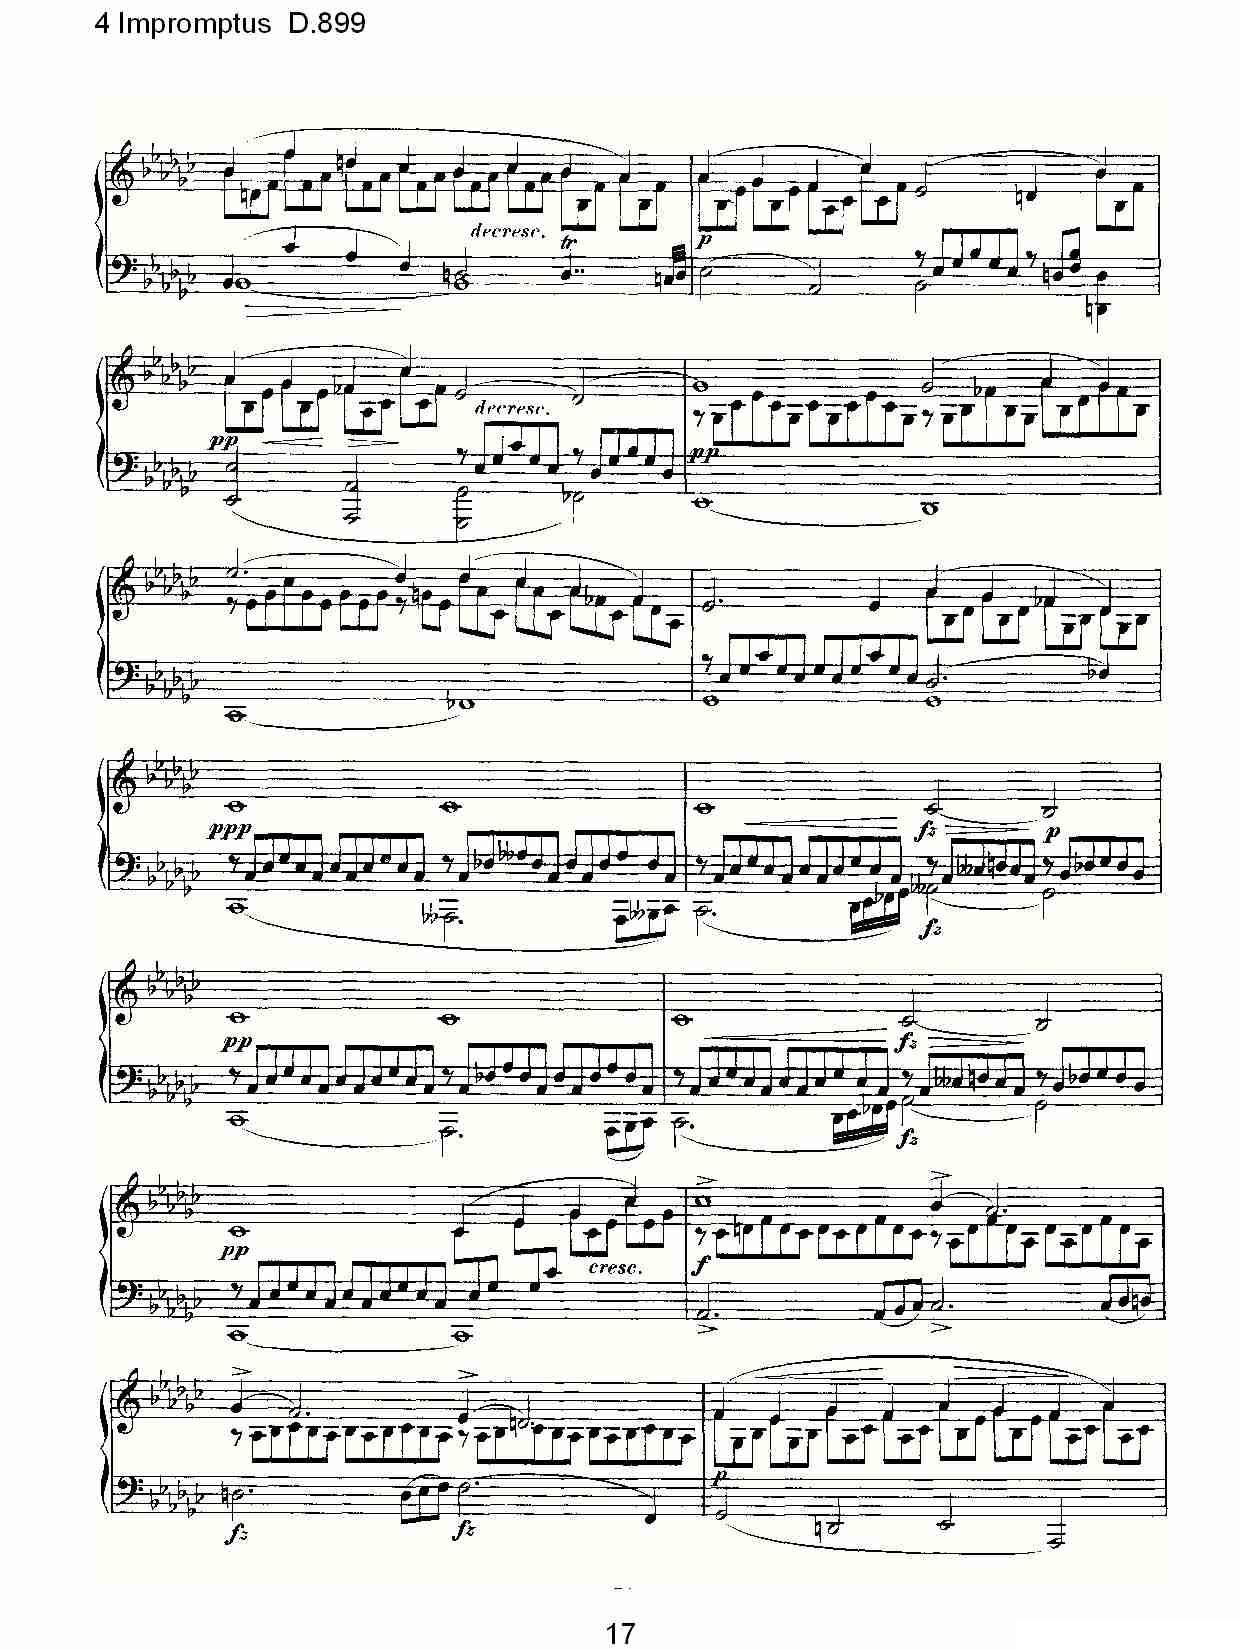 4 Impromptus D.899（4人即兴演奏 D.899）钢琴曲谱（图17）